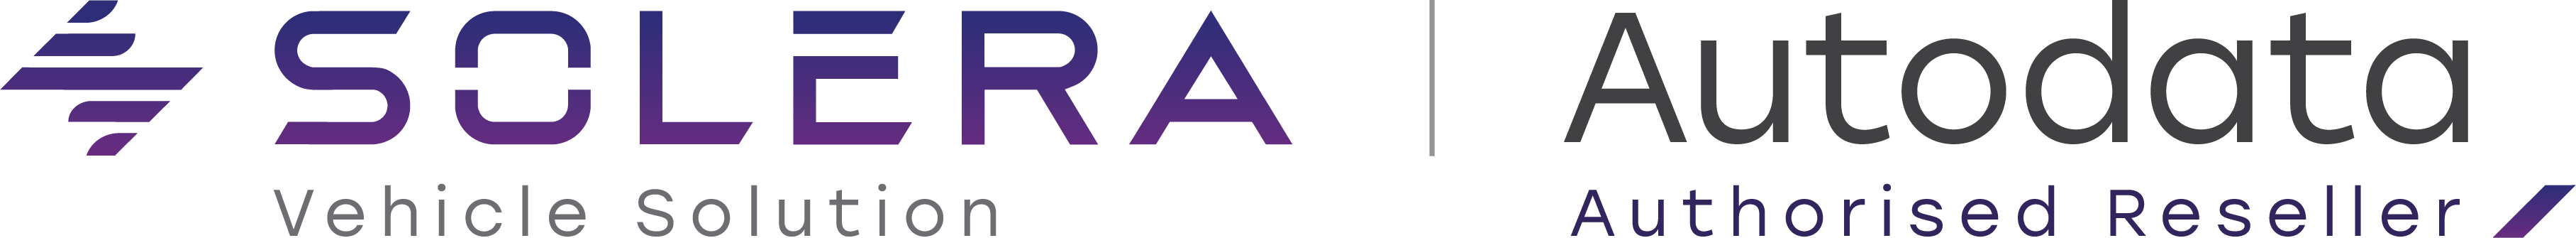 Logotip-Solera-Autodata